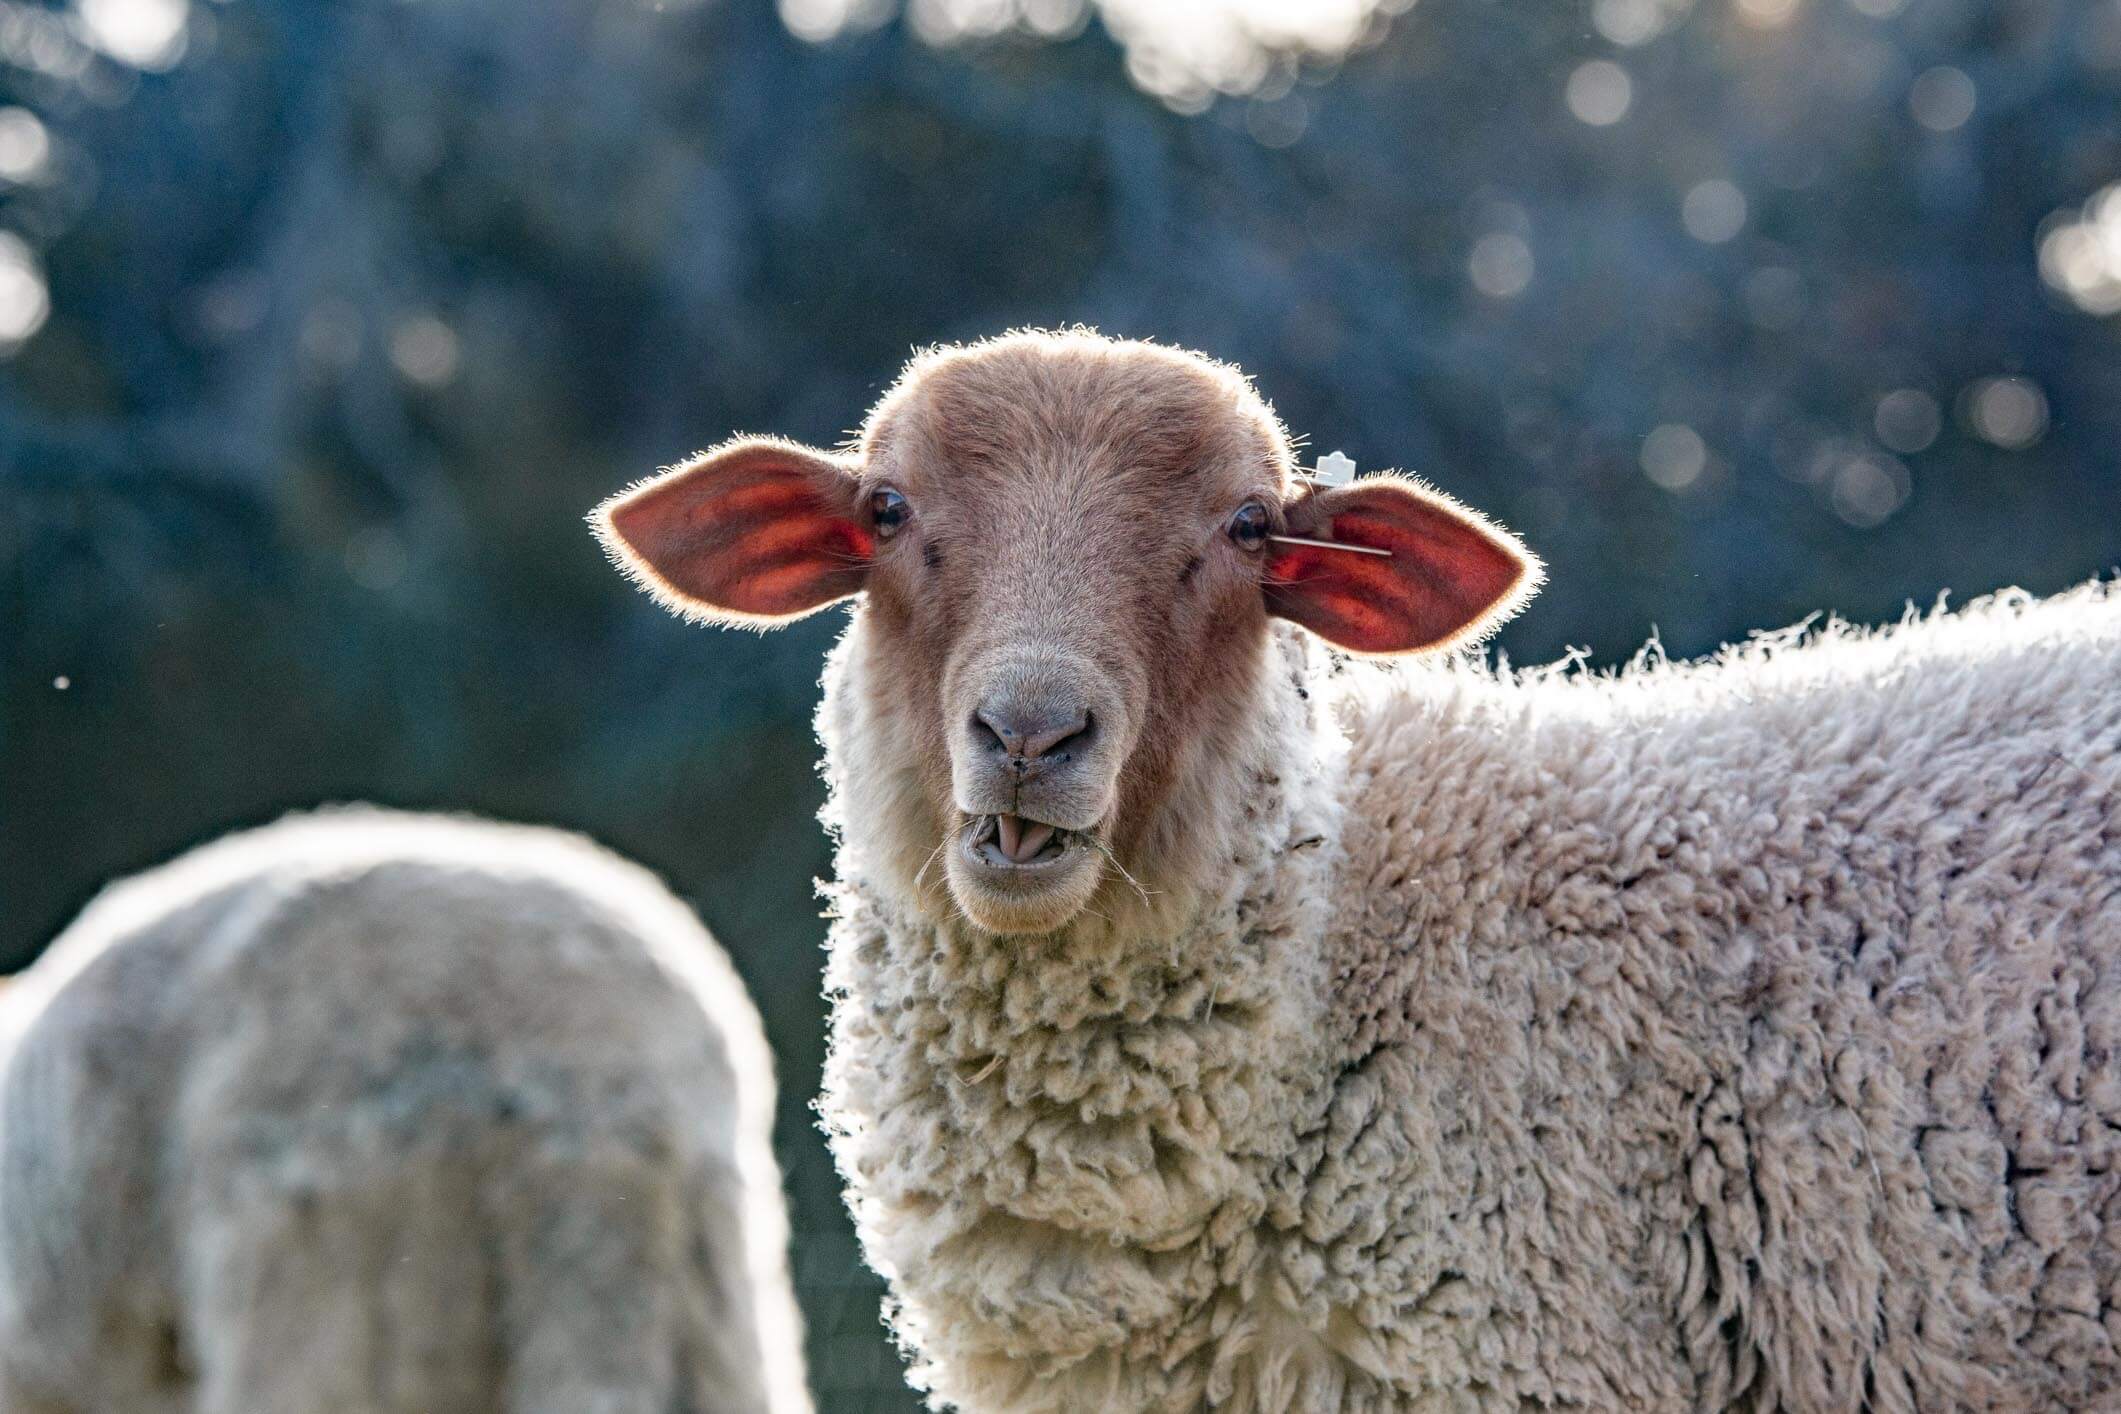 Tunis Sheep for sale in Waco, Texas